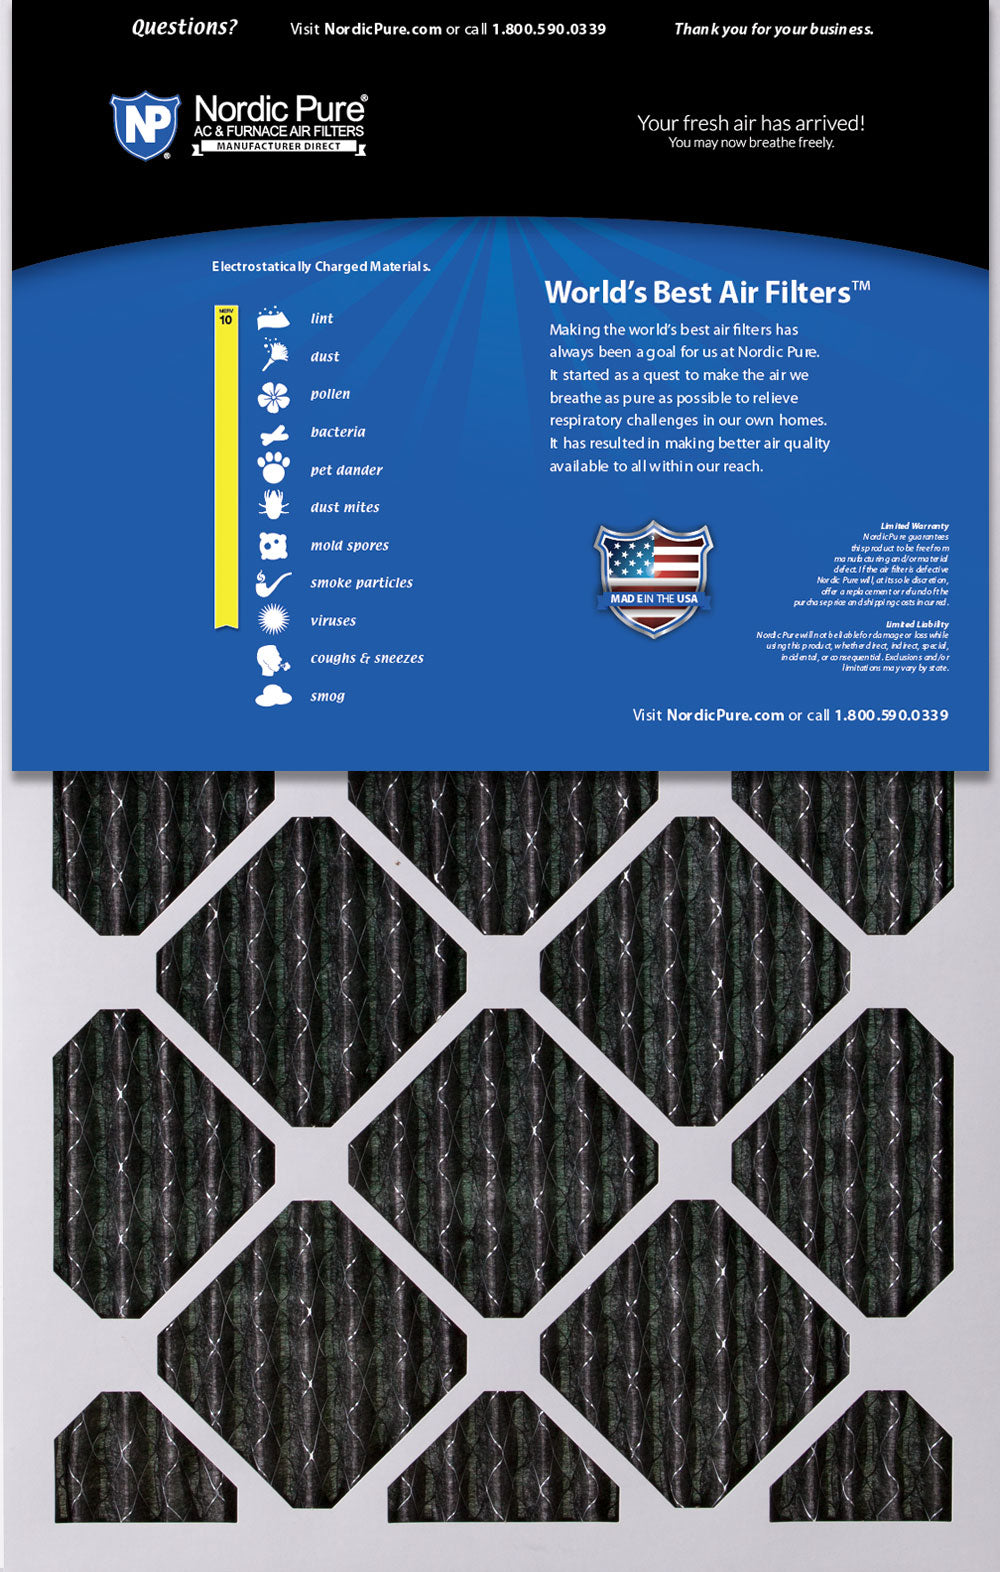 12x15x1 MERV 10 Plus Carbon AC Furnace Filters